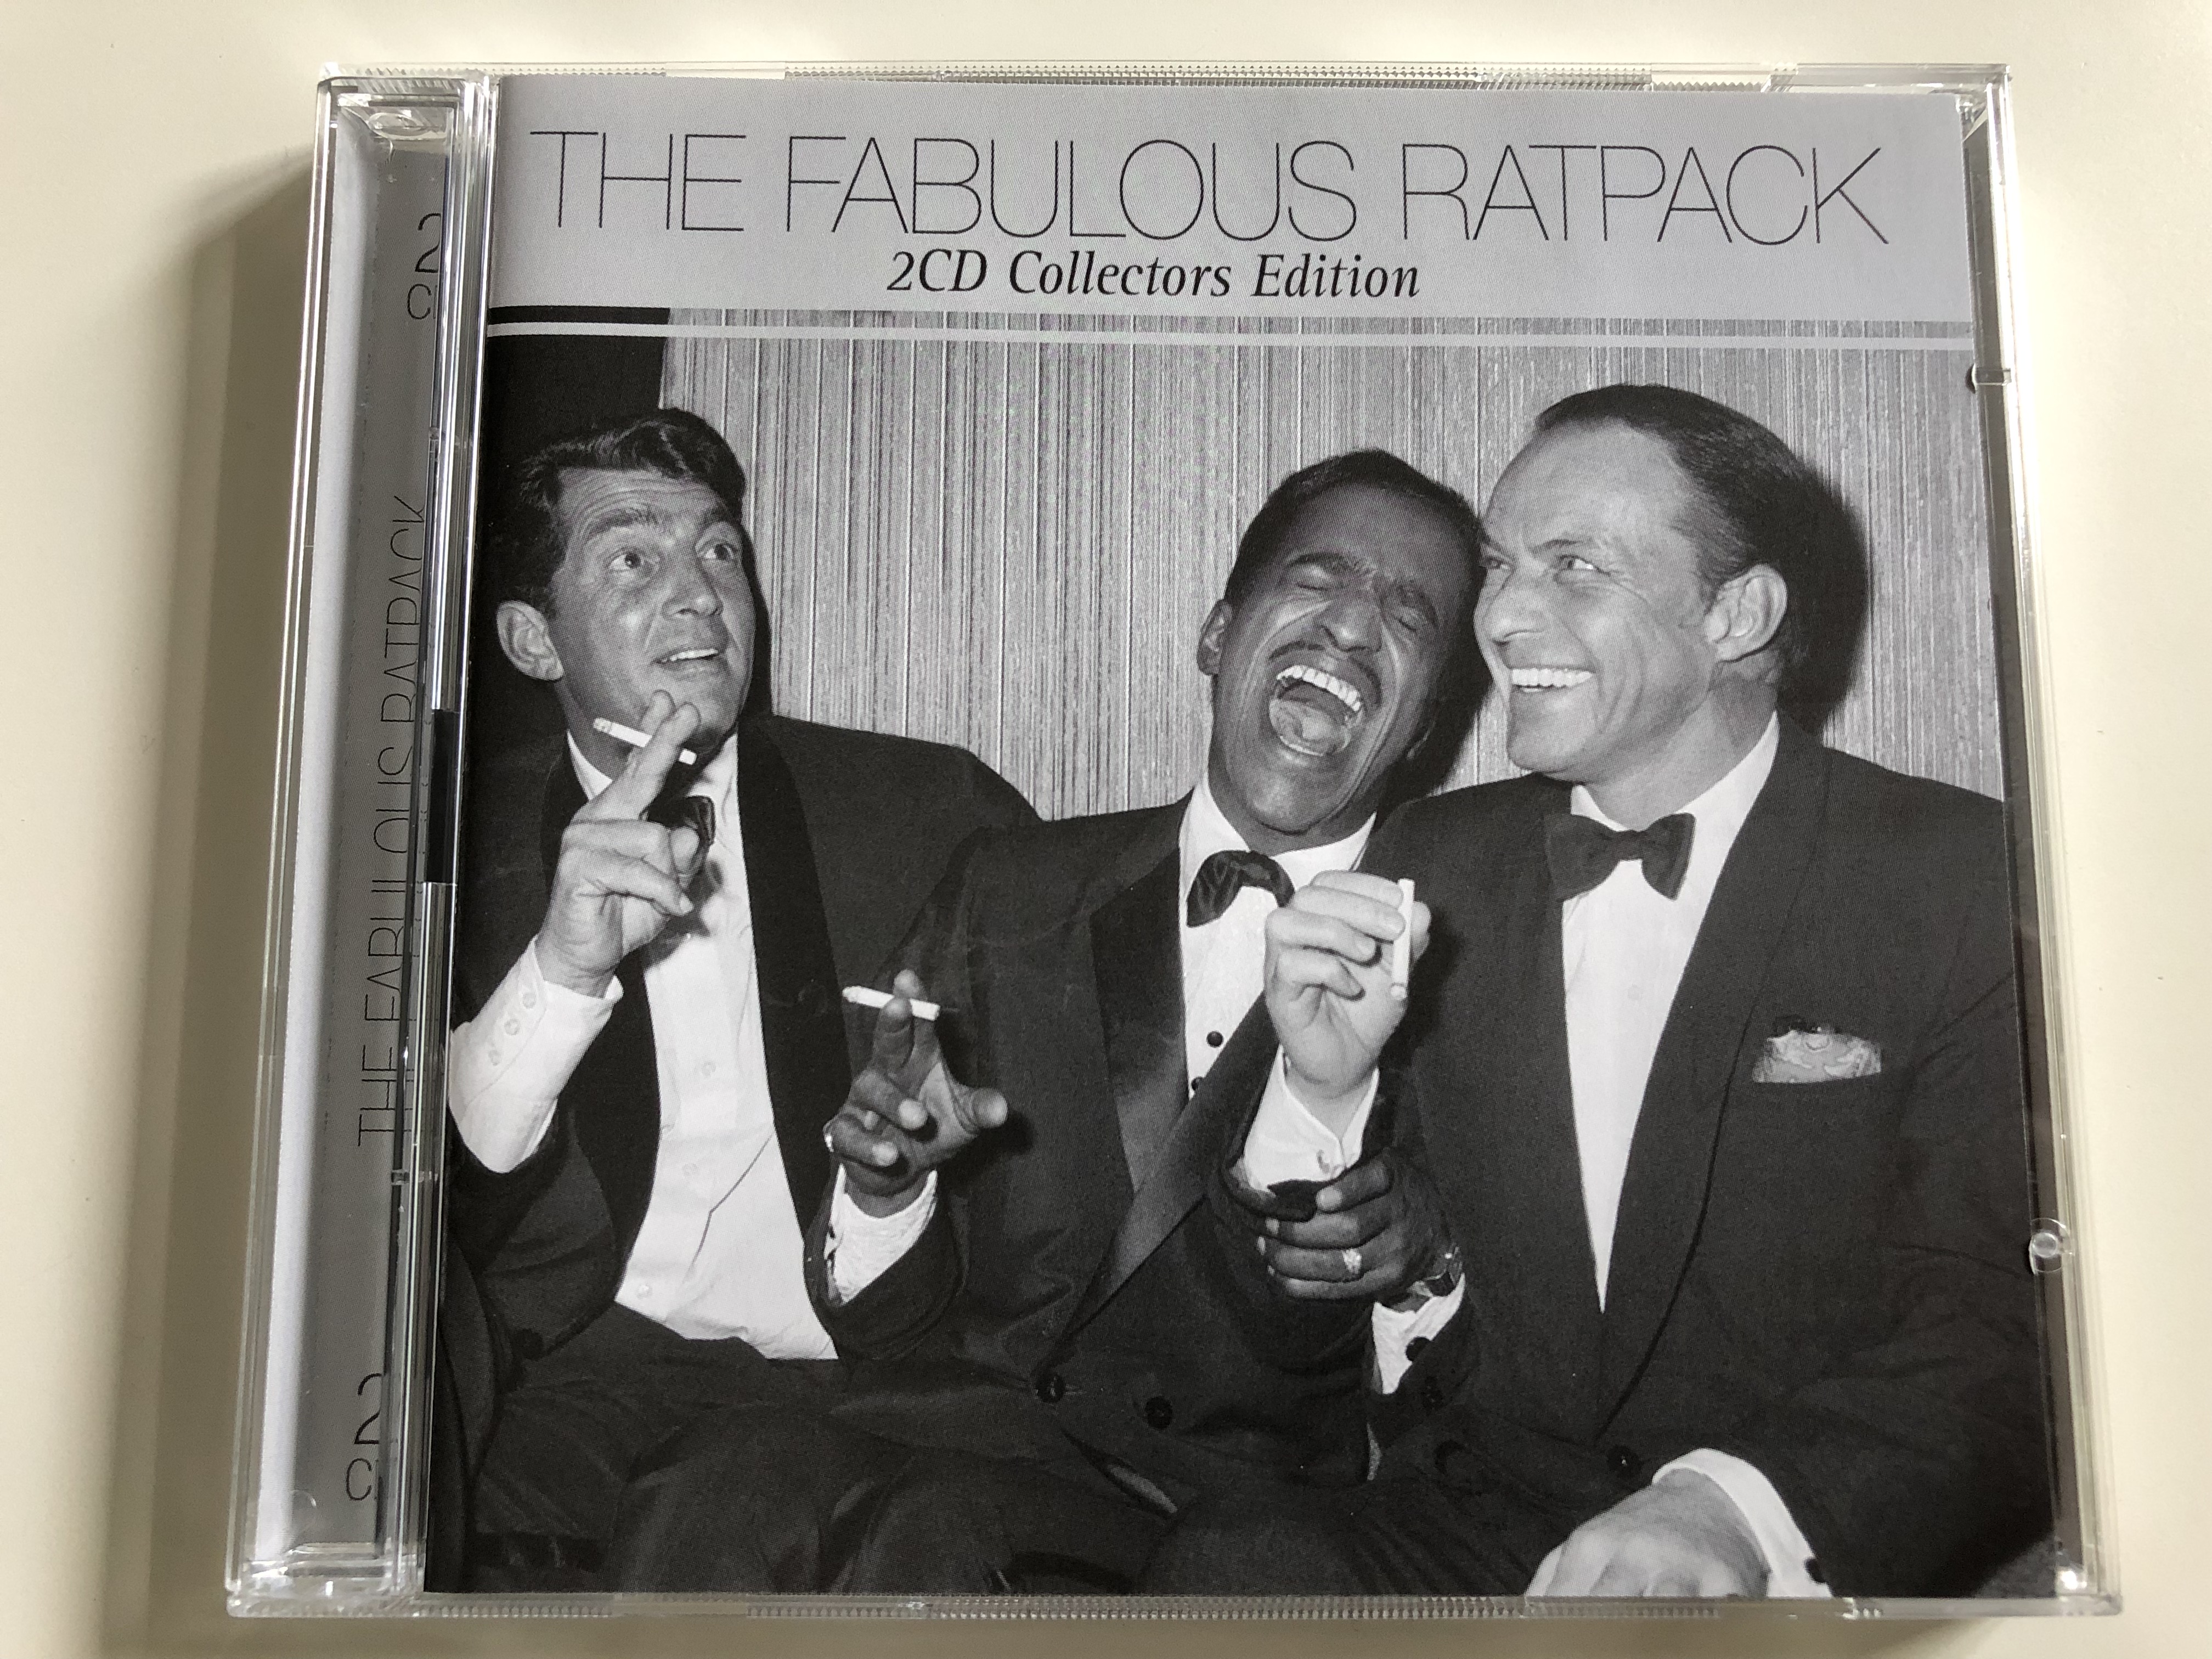 the-fabulous-ratpack-2cd-collectors-edition-dean-martin-frank-sinatra-sammy-davis-jr-the-ratpack-2x-audio-cd-2007-play2-018b-1-.jpg